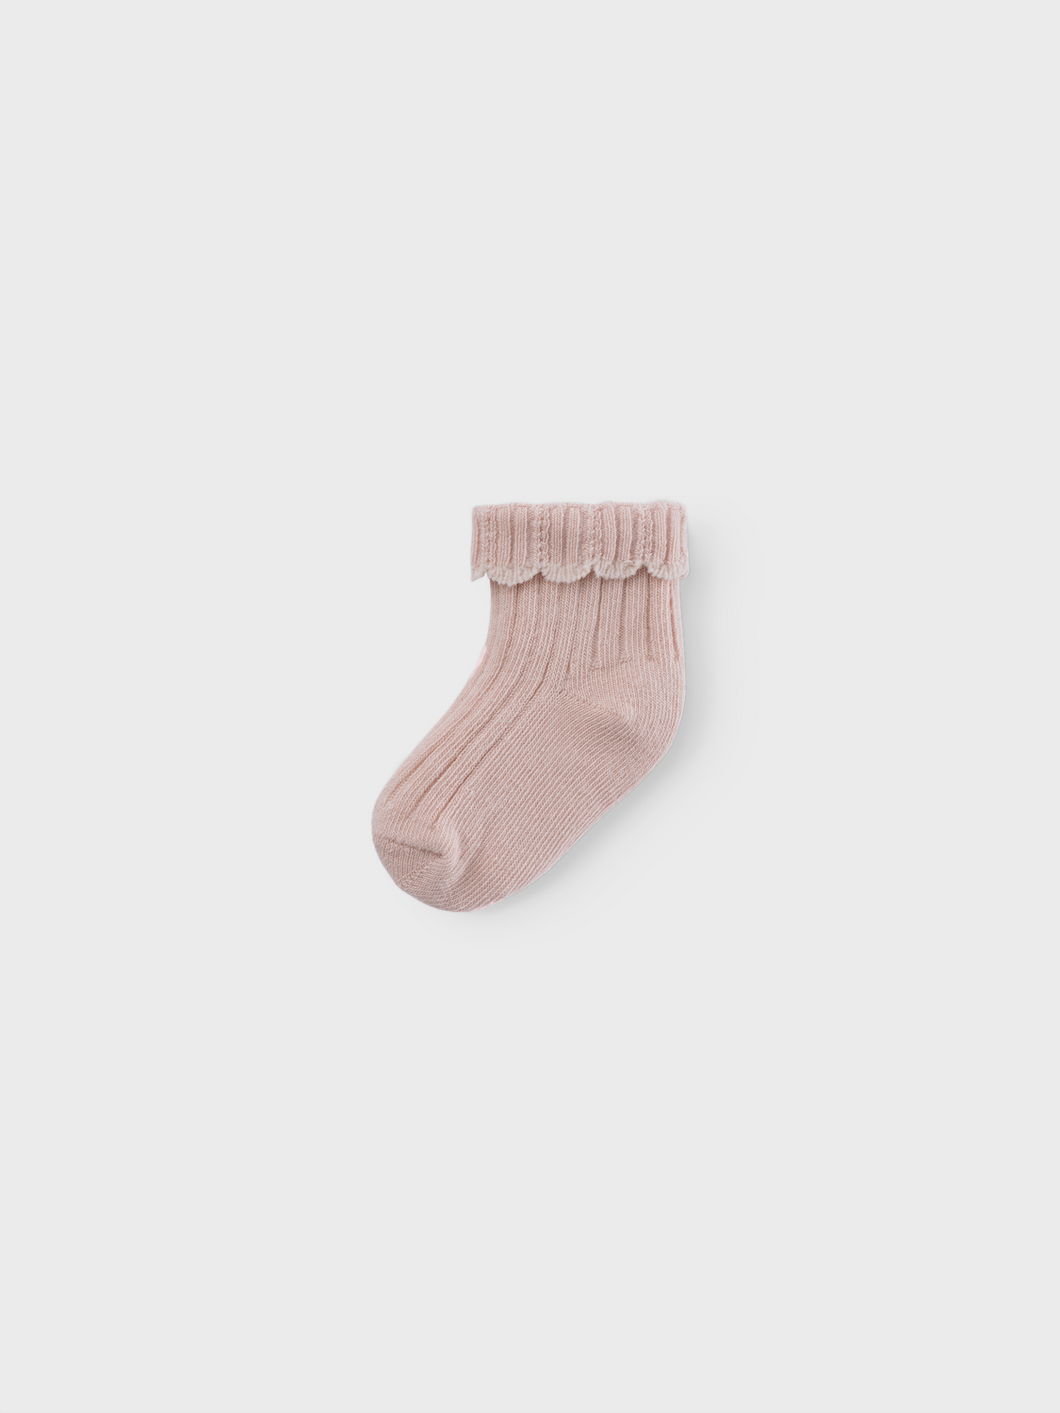 NBFNOBINE Socks - Sepia Rose